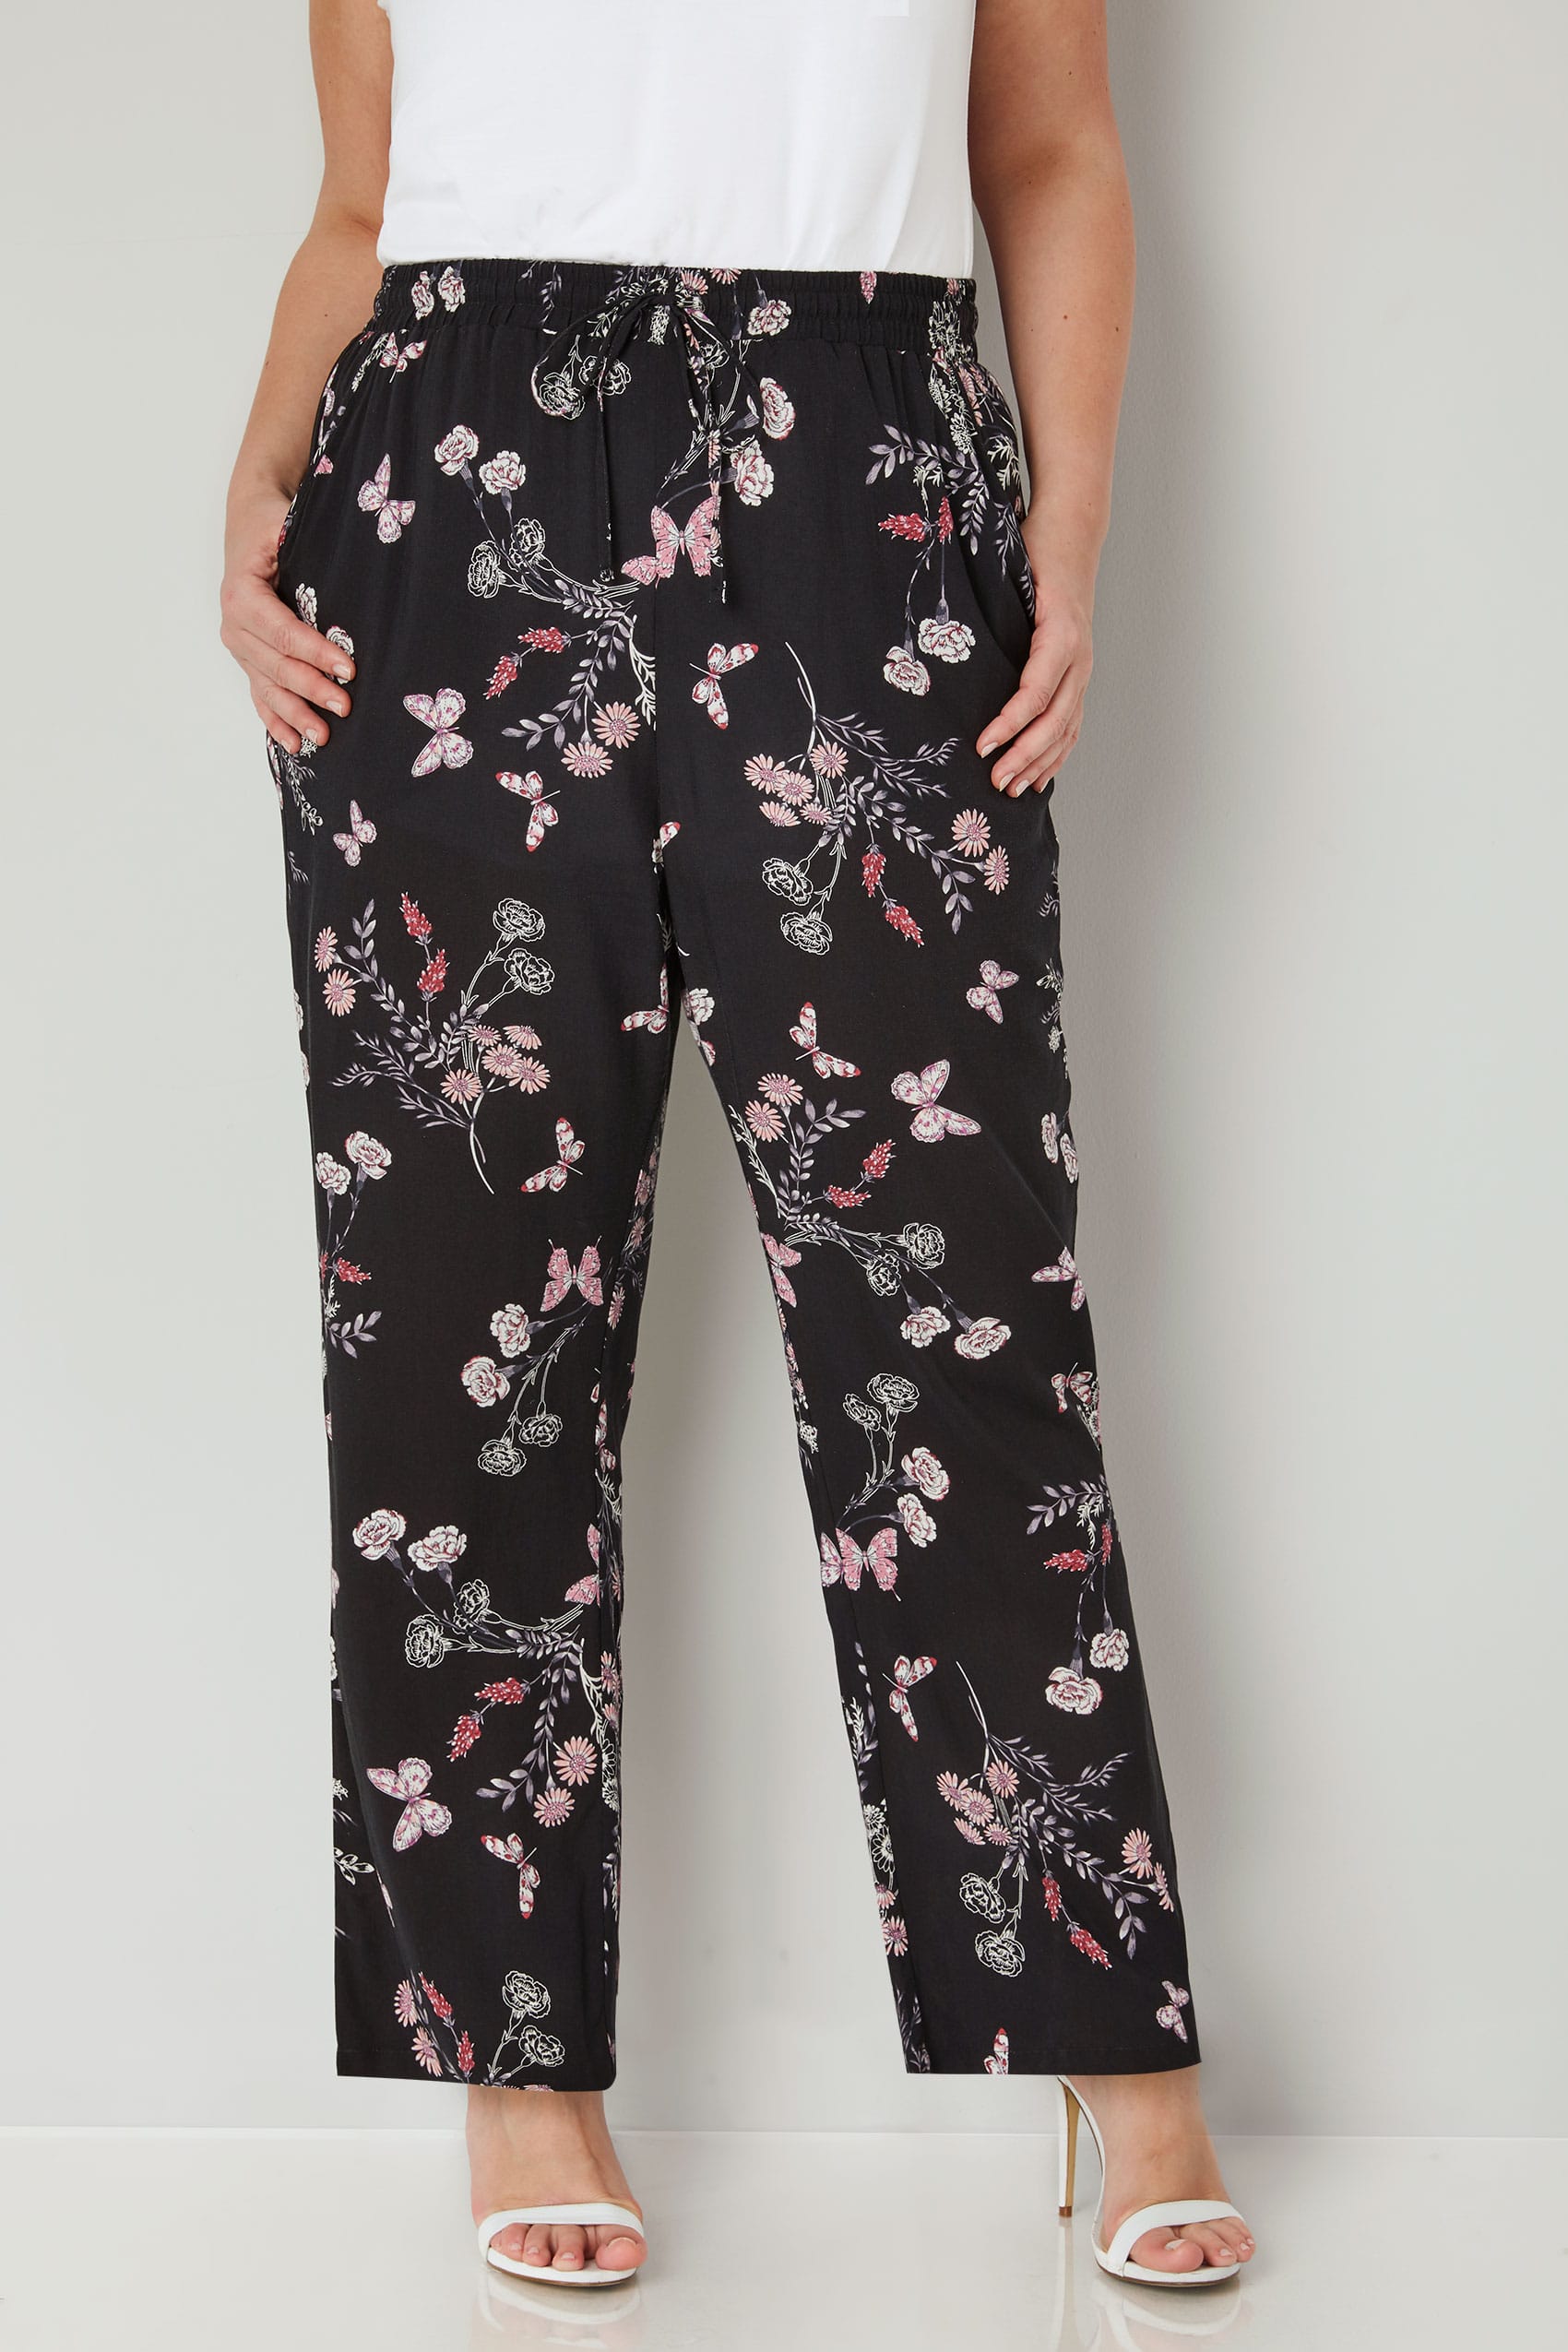 Black & Multi Butterfly & Floral Print Wide Leg Trousers, plus size 16 ...